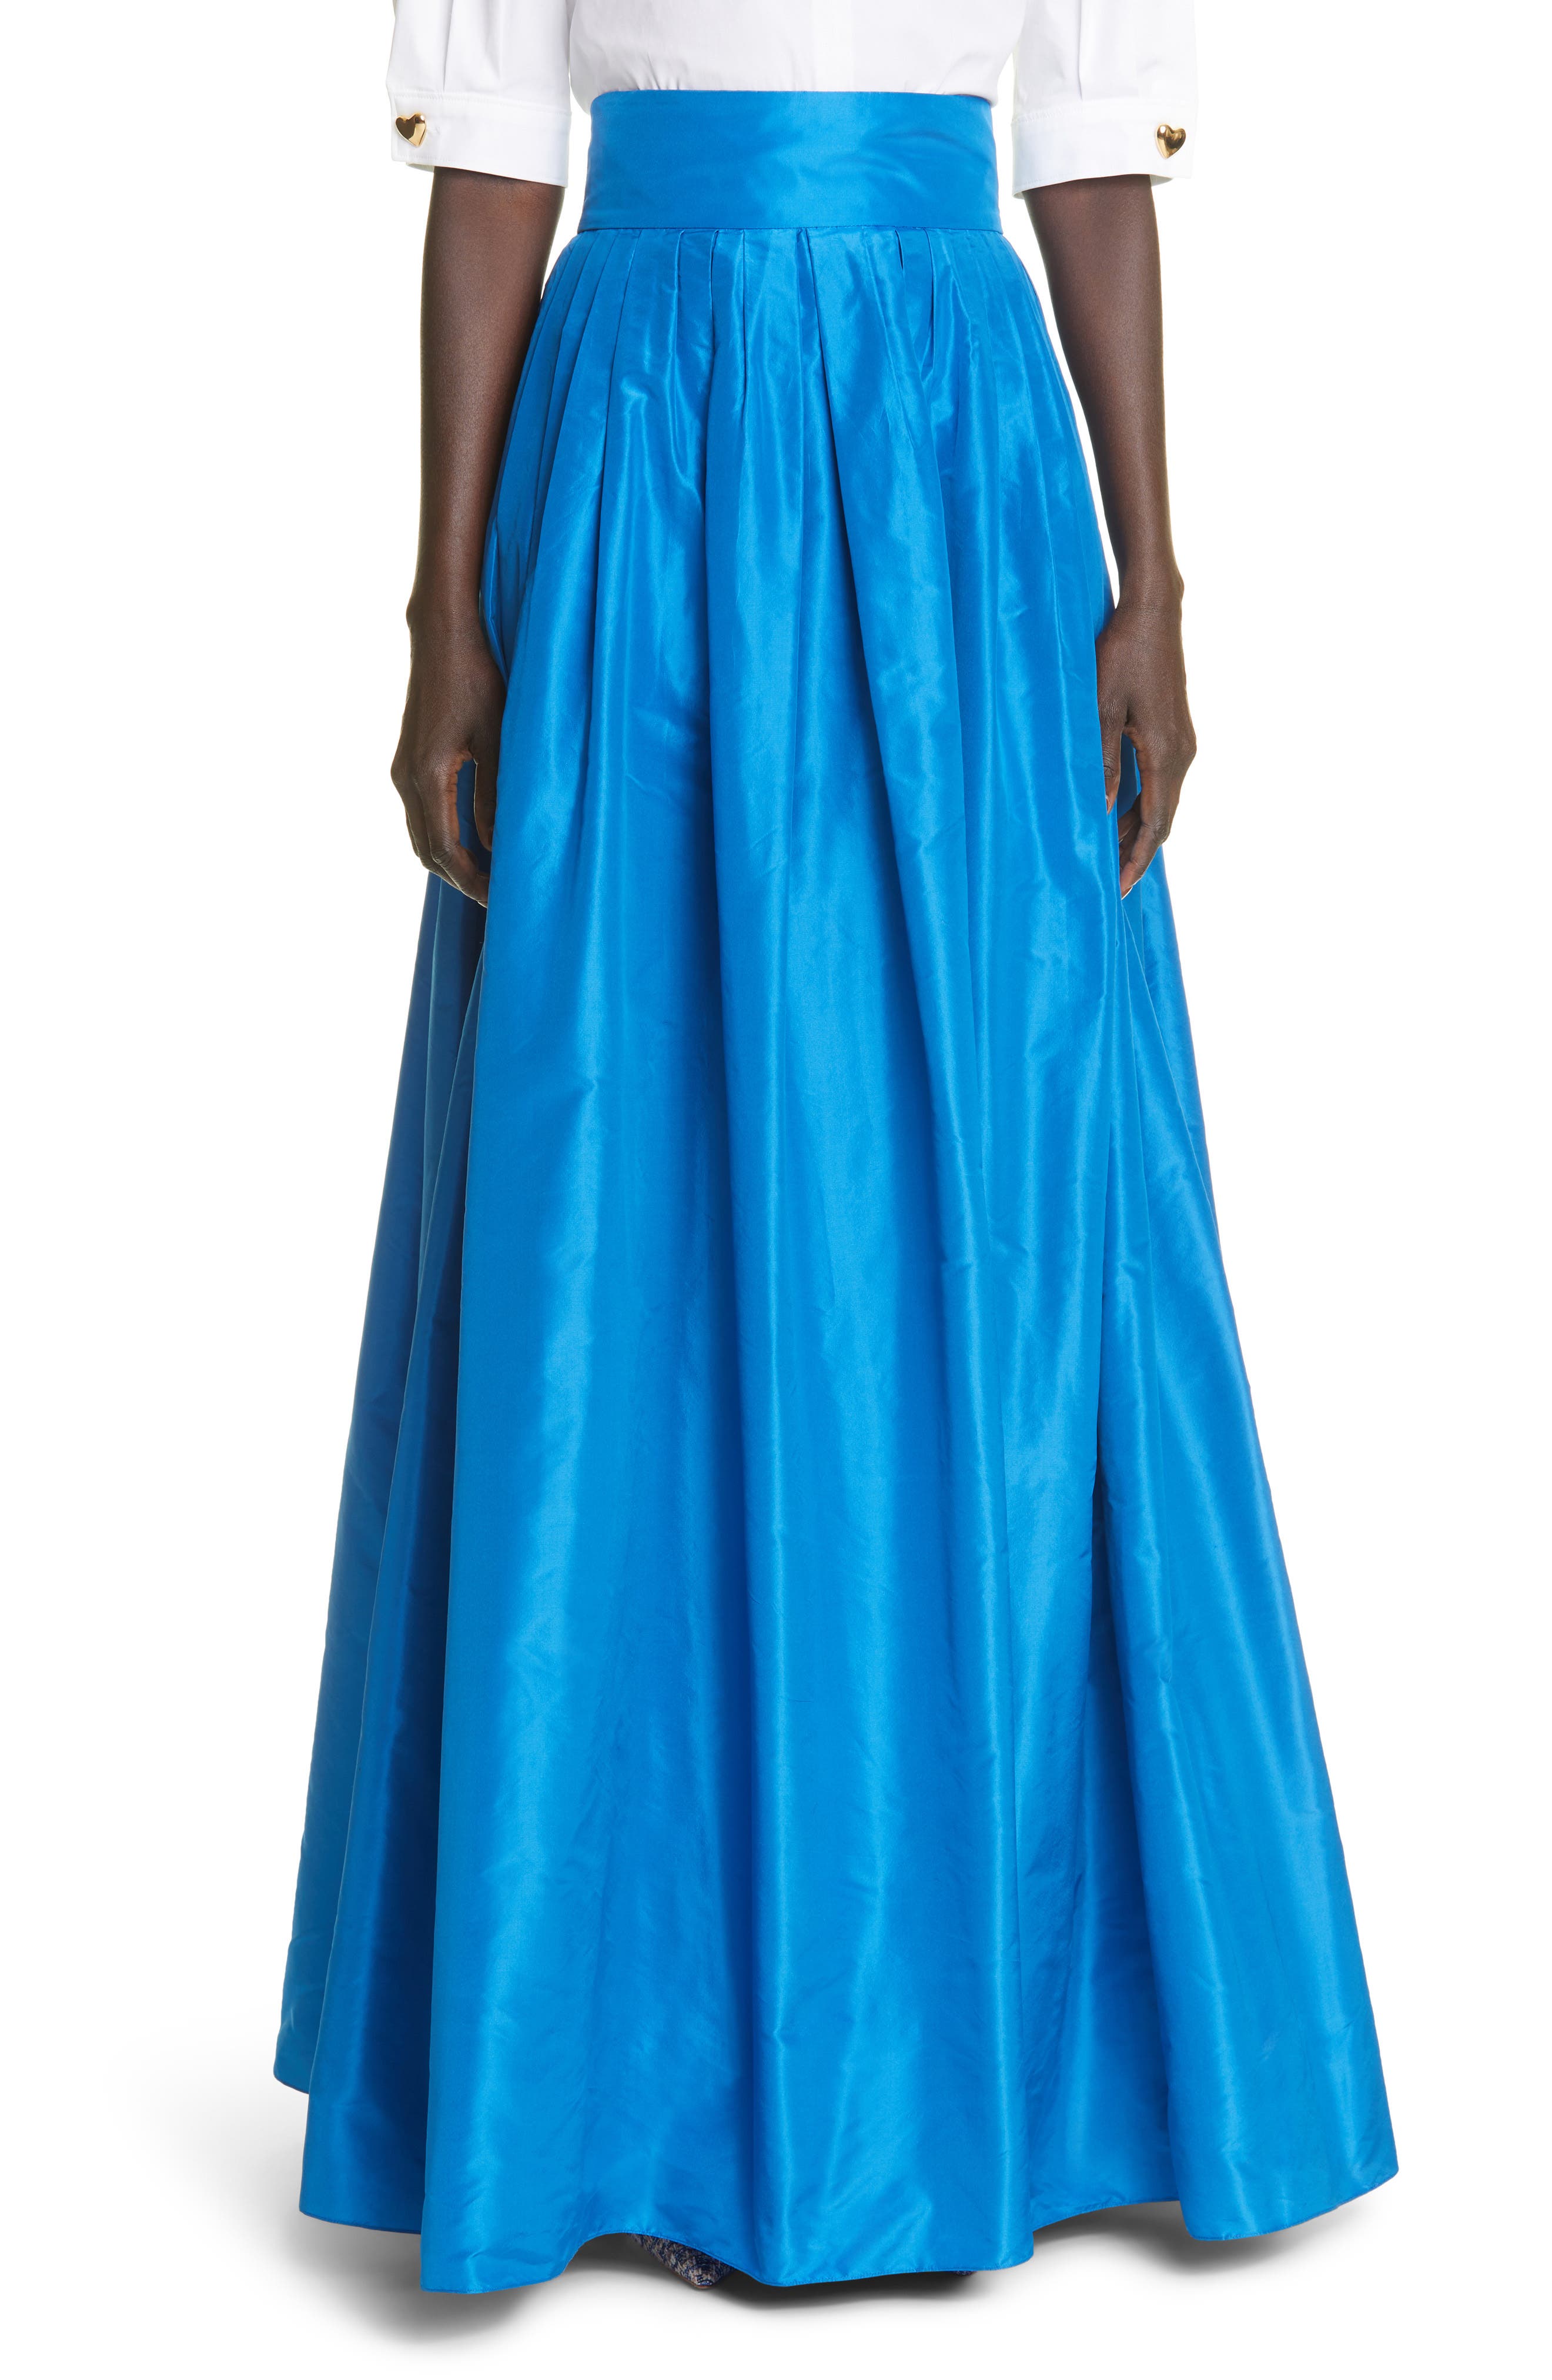 Carolina Herrera Silk Taffeta Ballgown Skirt in Baltic Blue at Nordstrom, Size 14